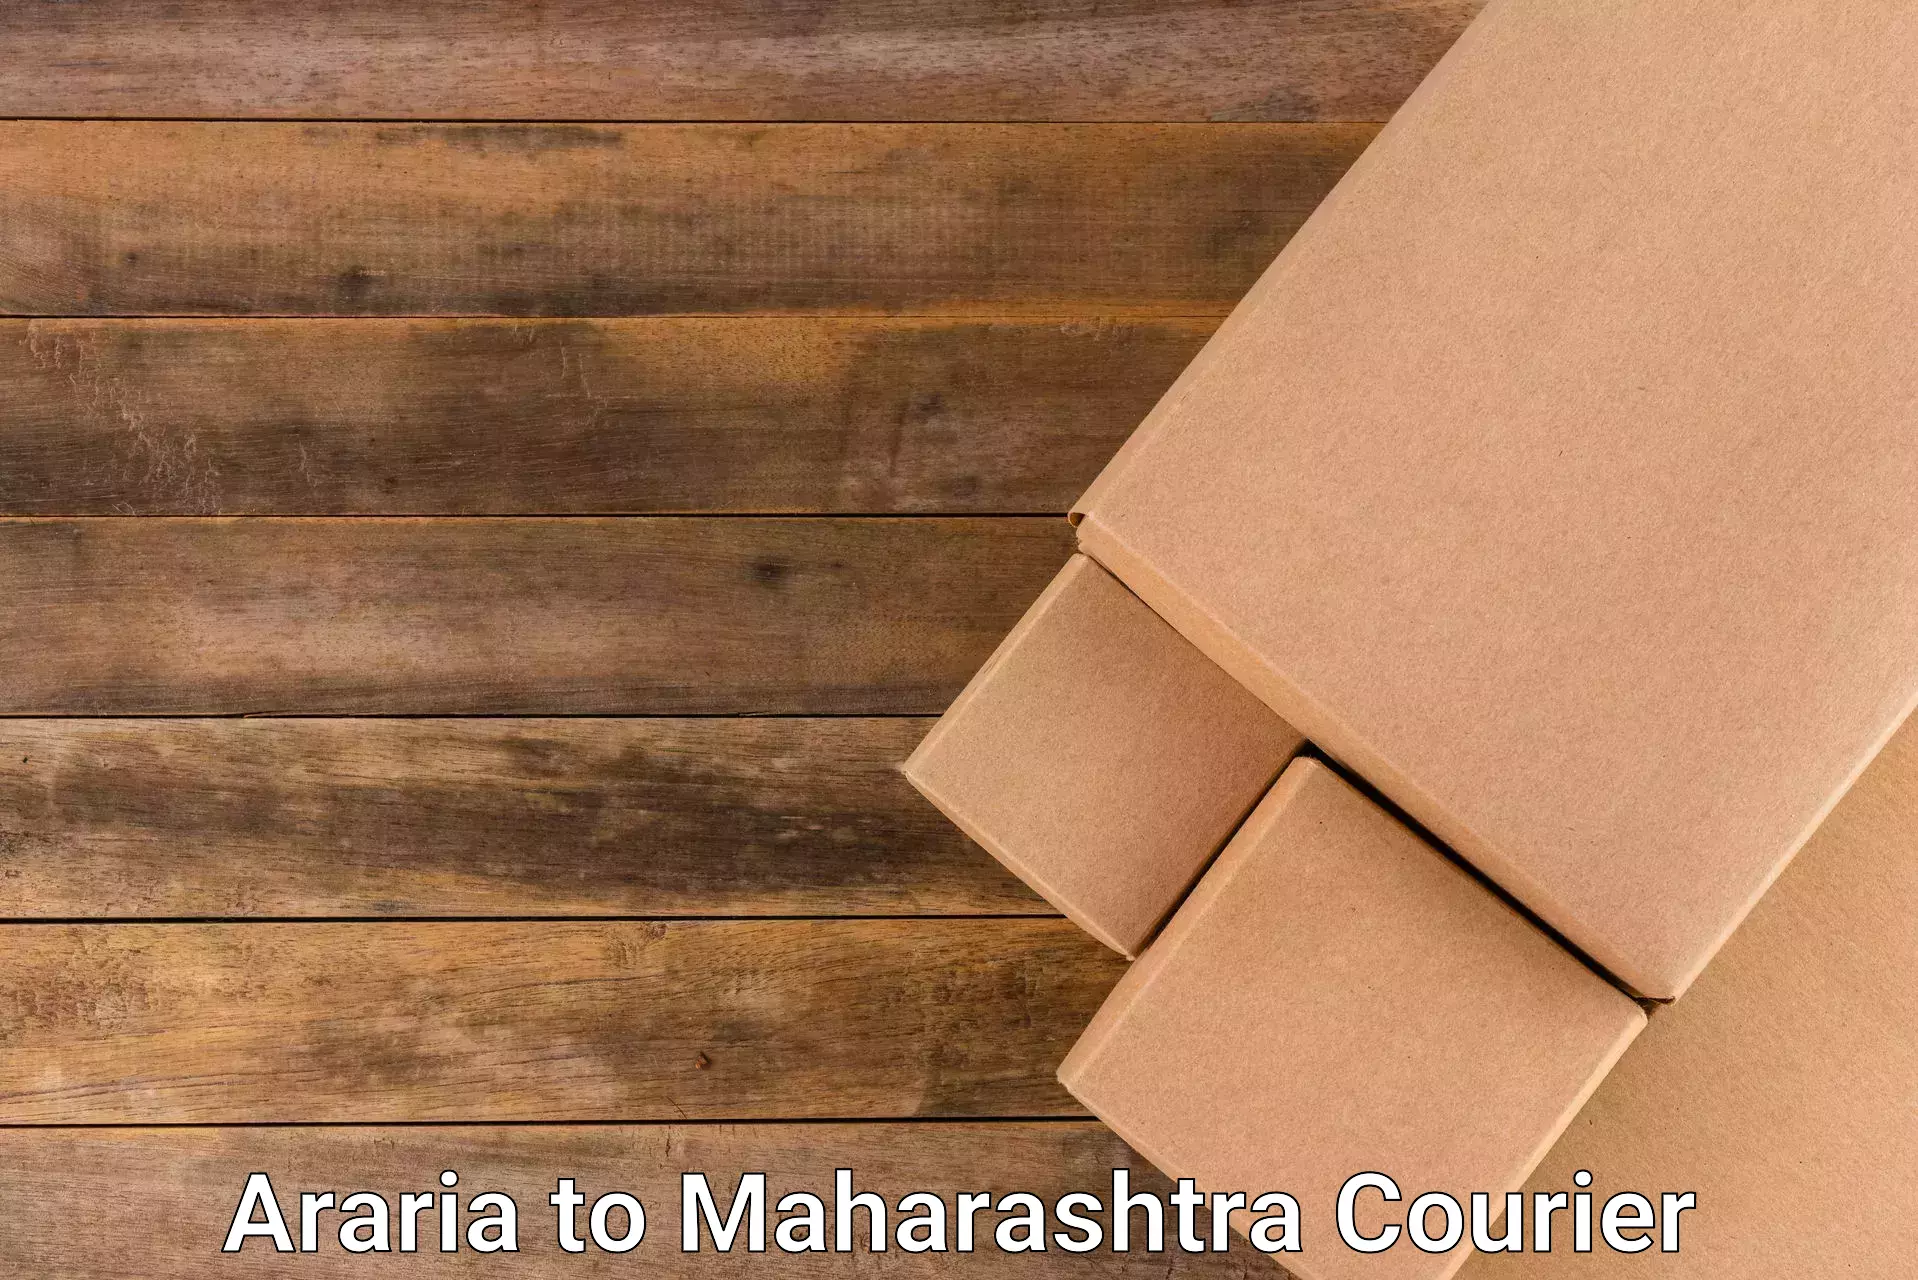 Urgent courier needs Araria to Fardapur